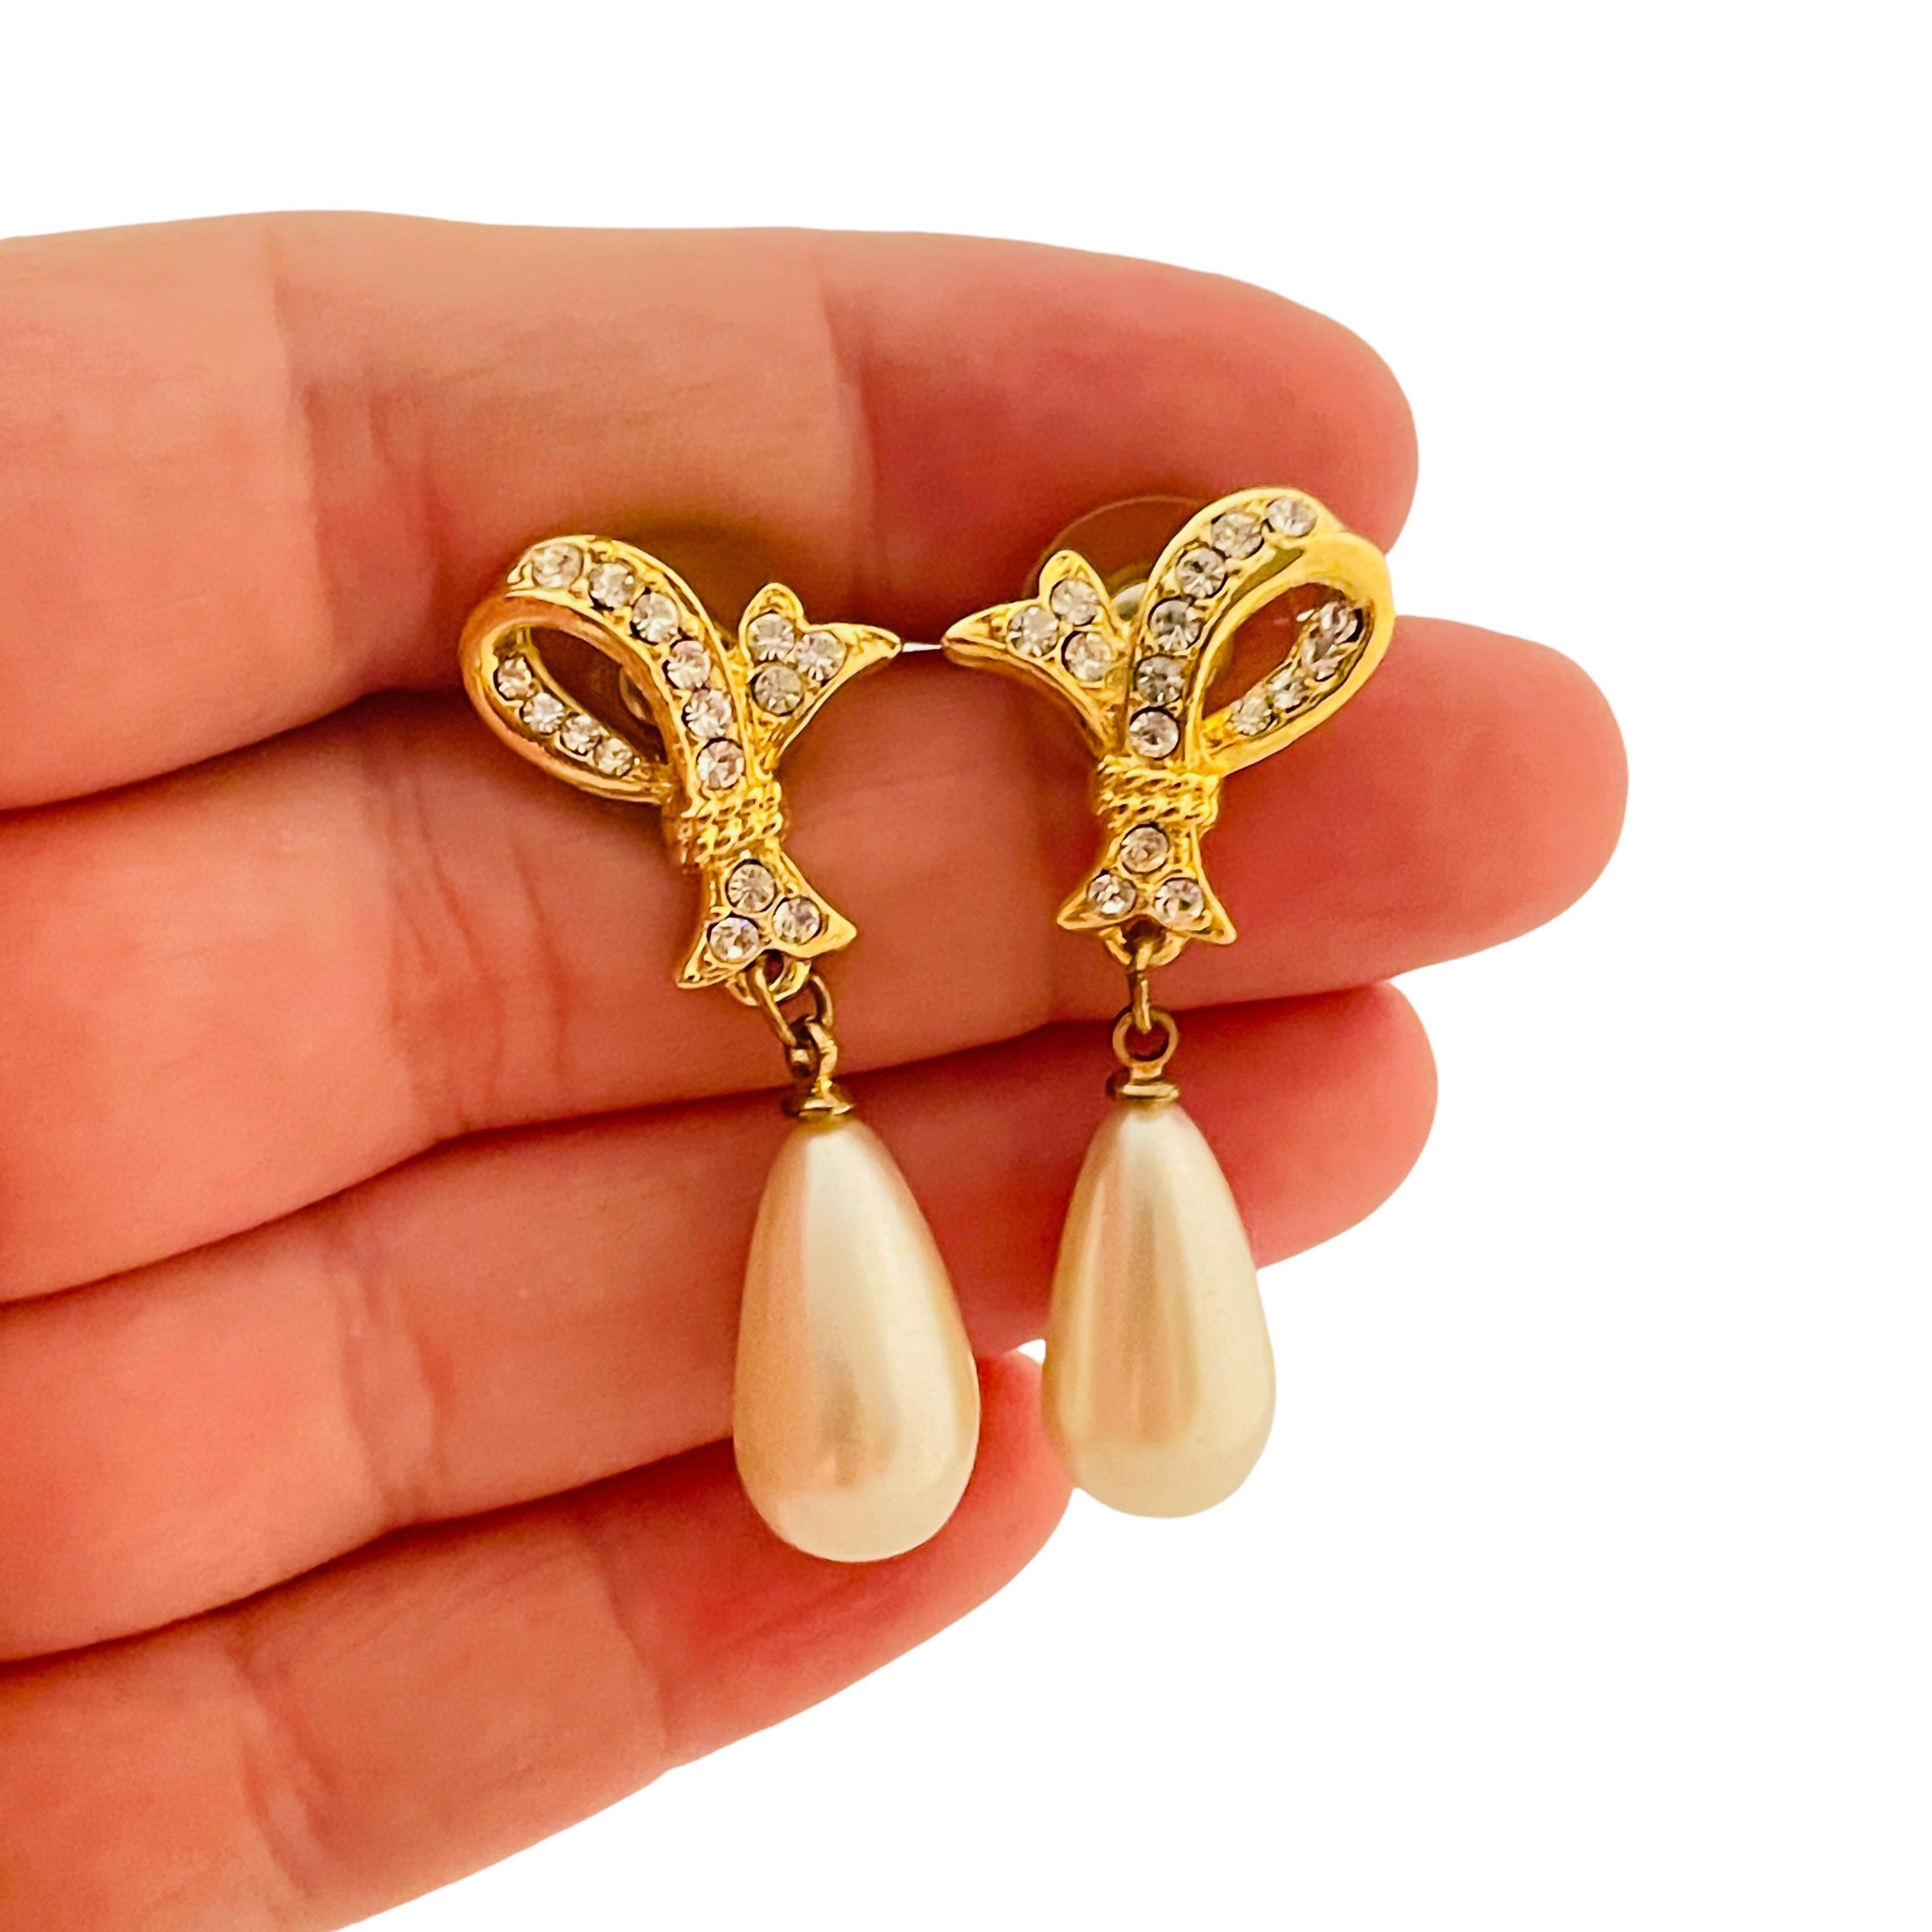 DETAILS

• unsigned

• gold tone with rhinestones

• vintage designer runway earrings

MEASUREMENTS

•  1.63